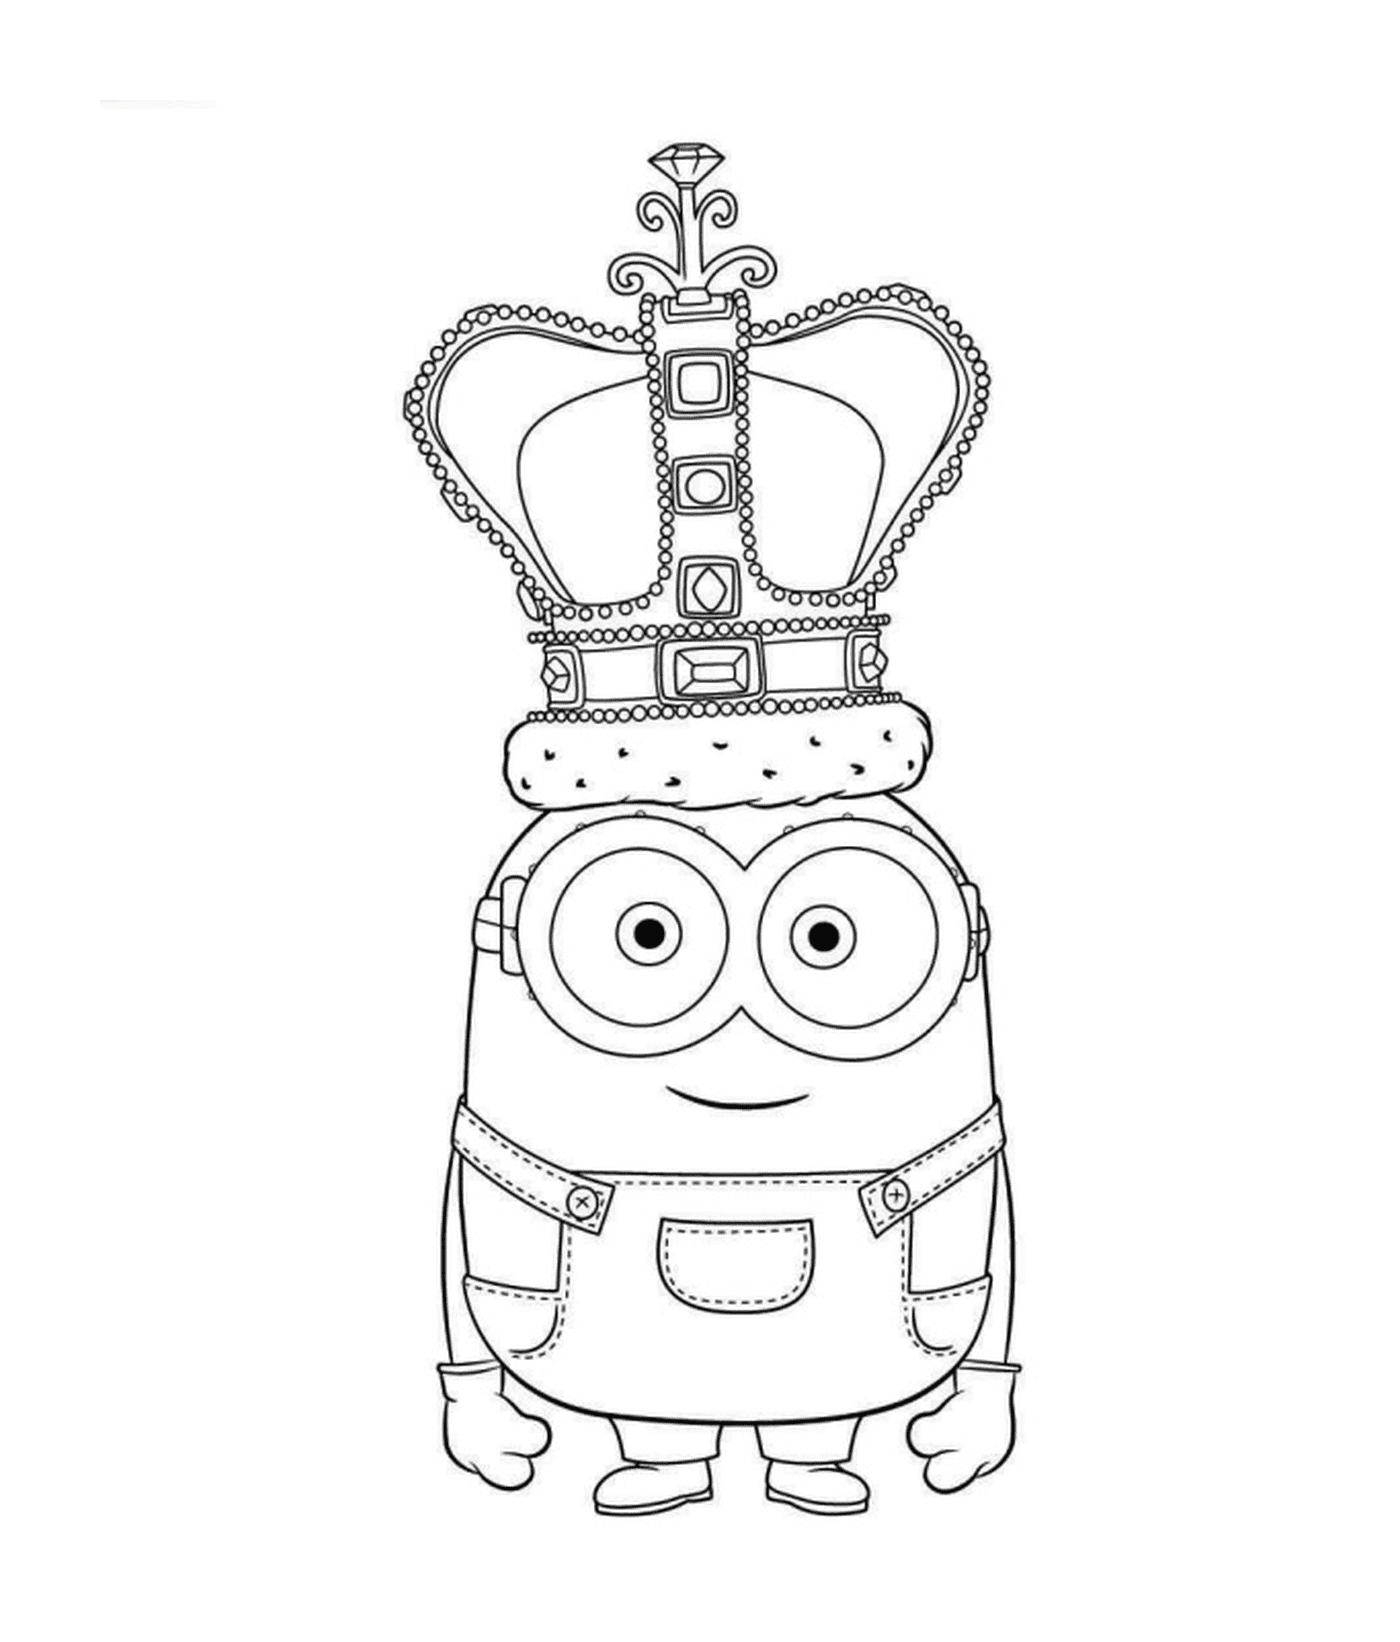  King Minion, crown on head 